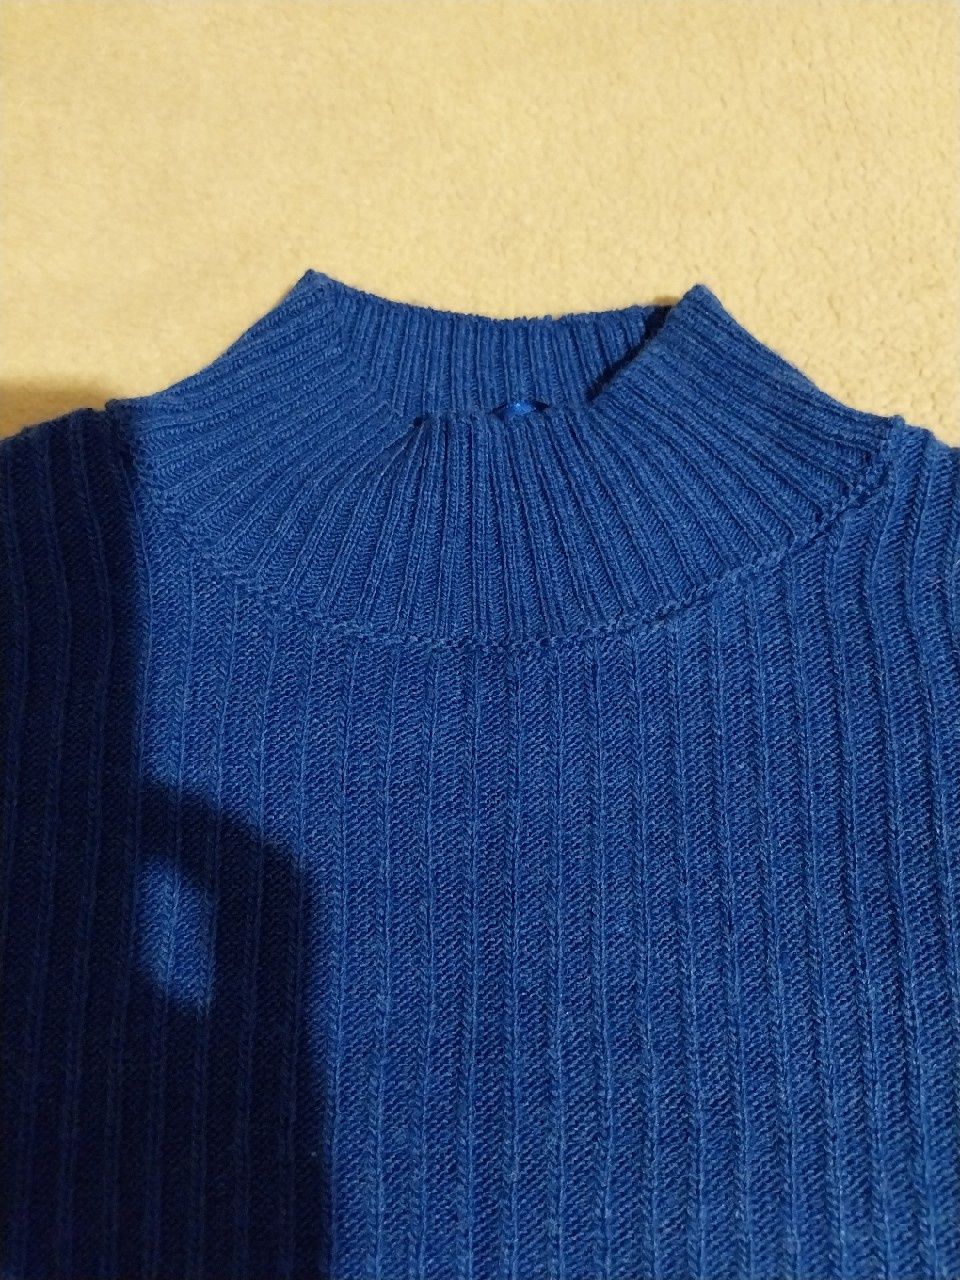 Damski chabrowy sweter